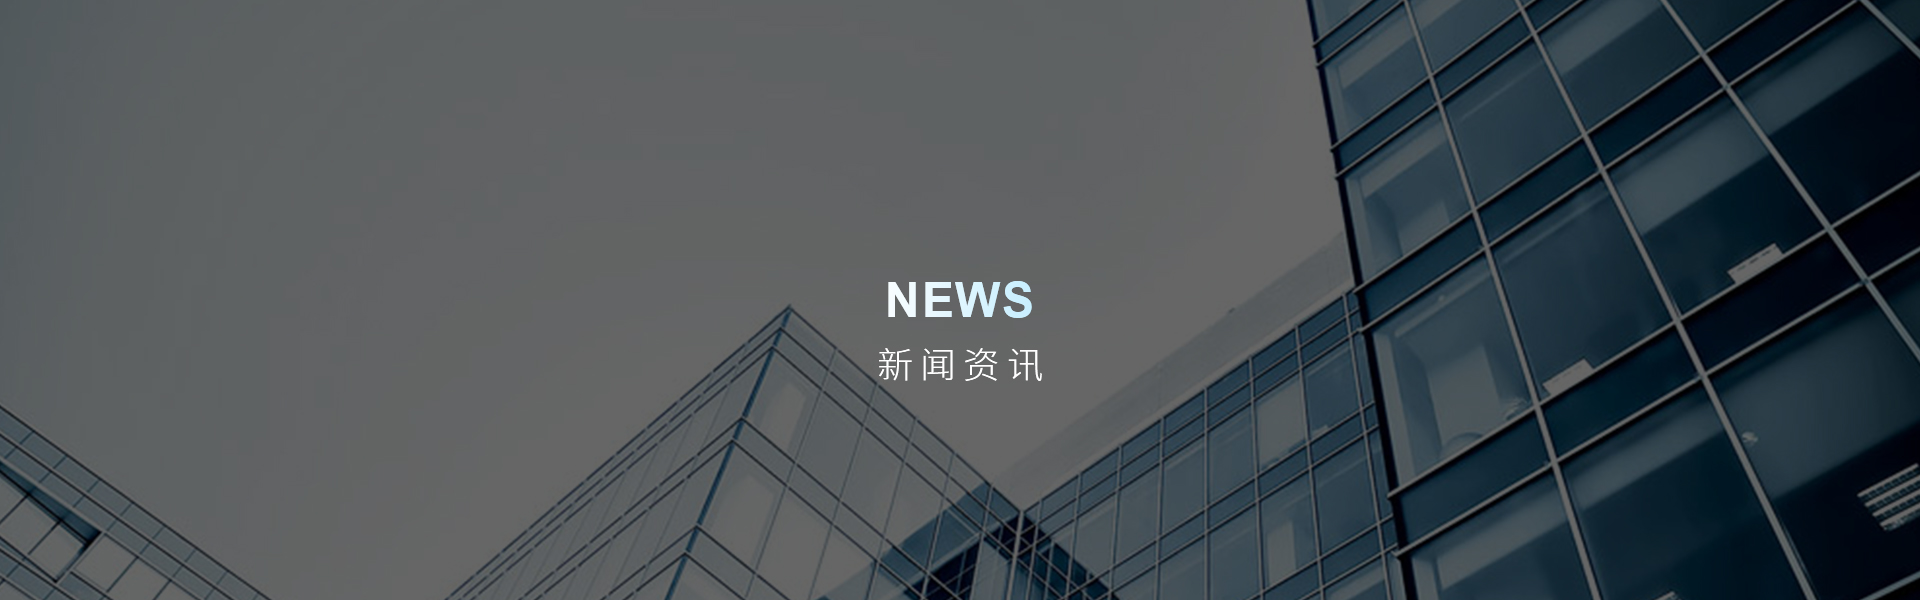 Rong Da Caijing News